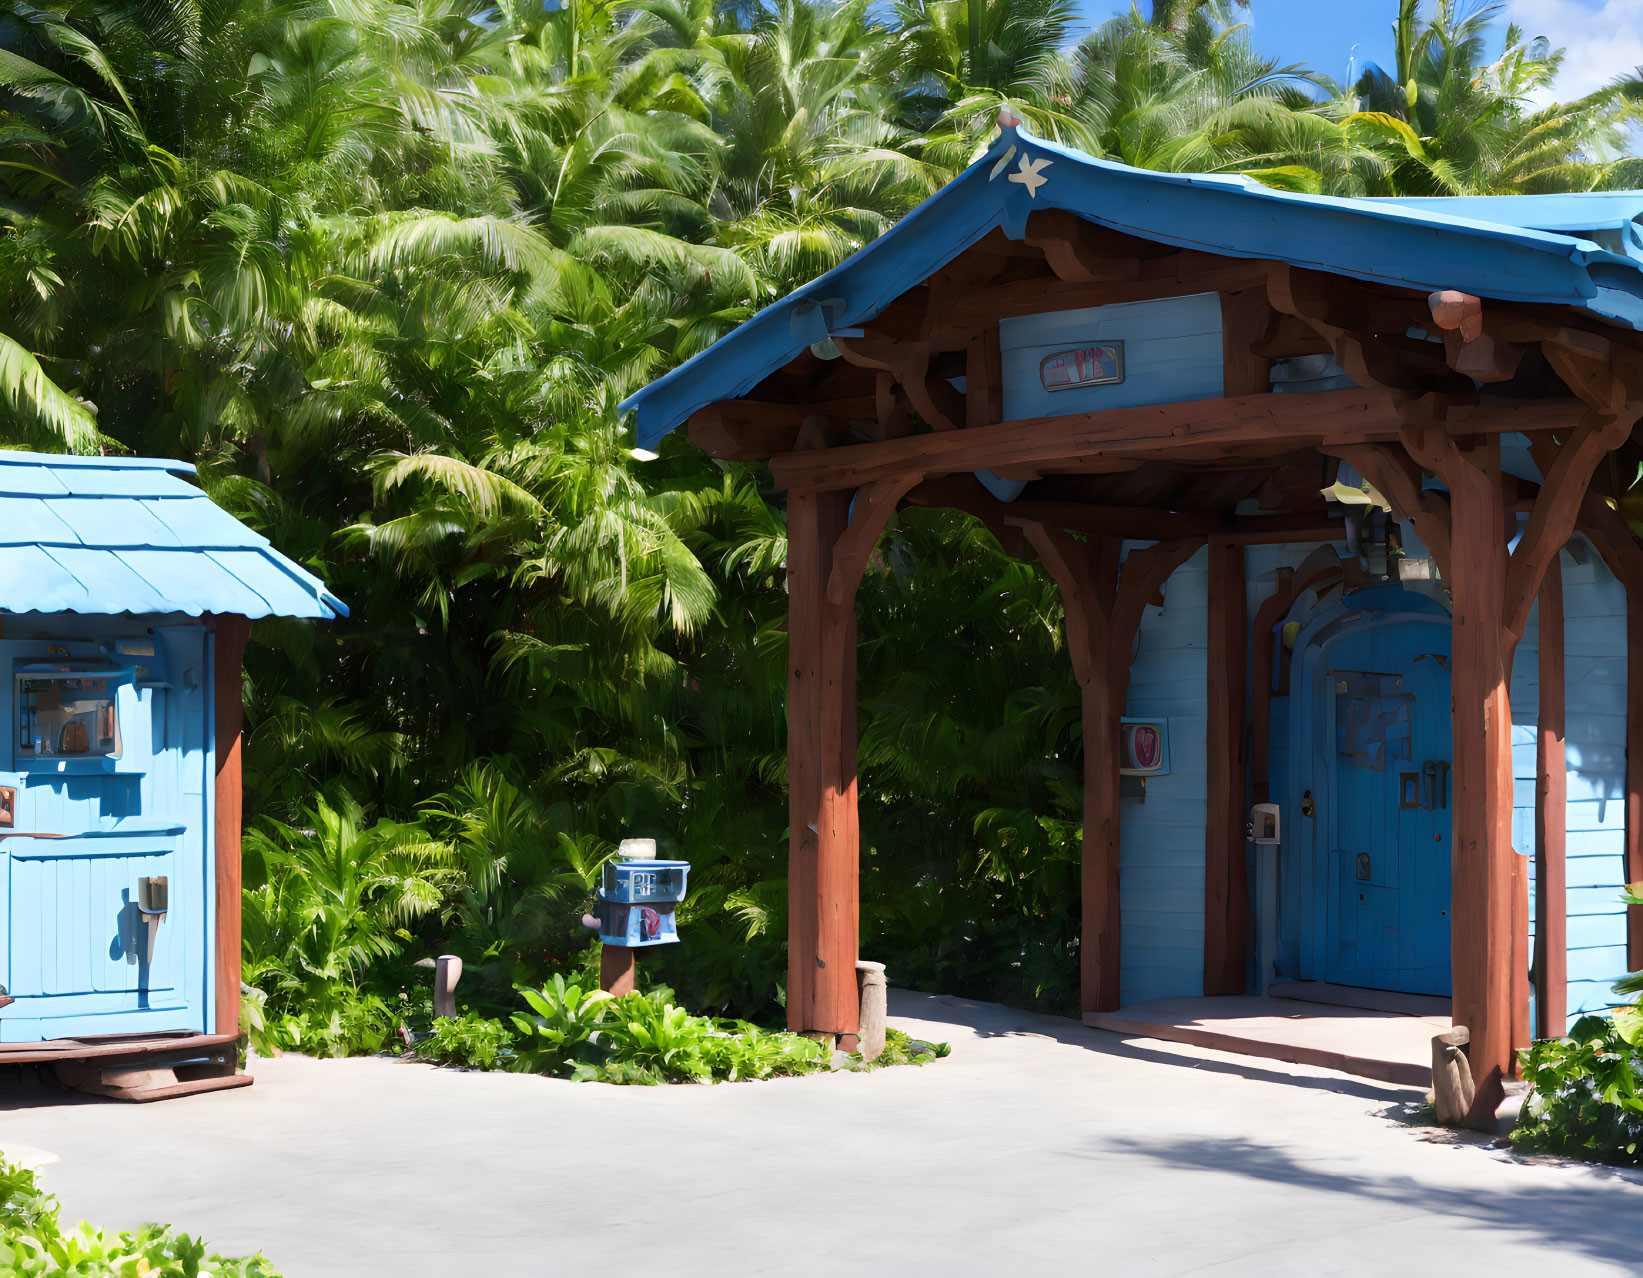 Tropical Beach Hut with Blue Trim Amid Palm Trees